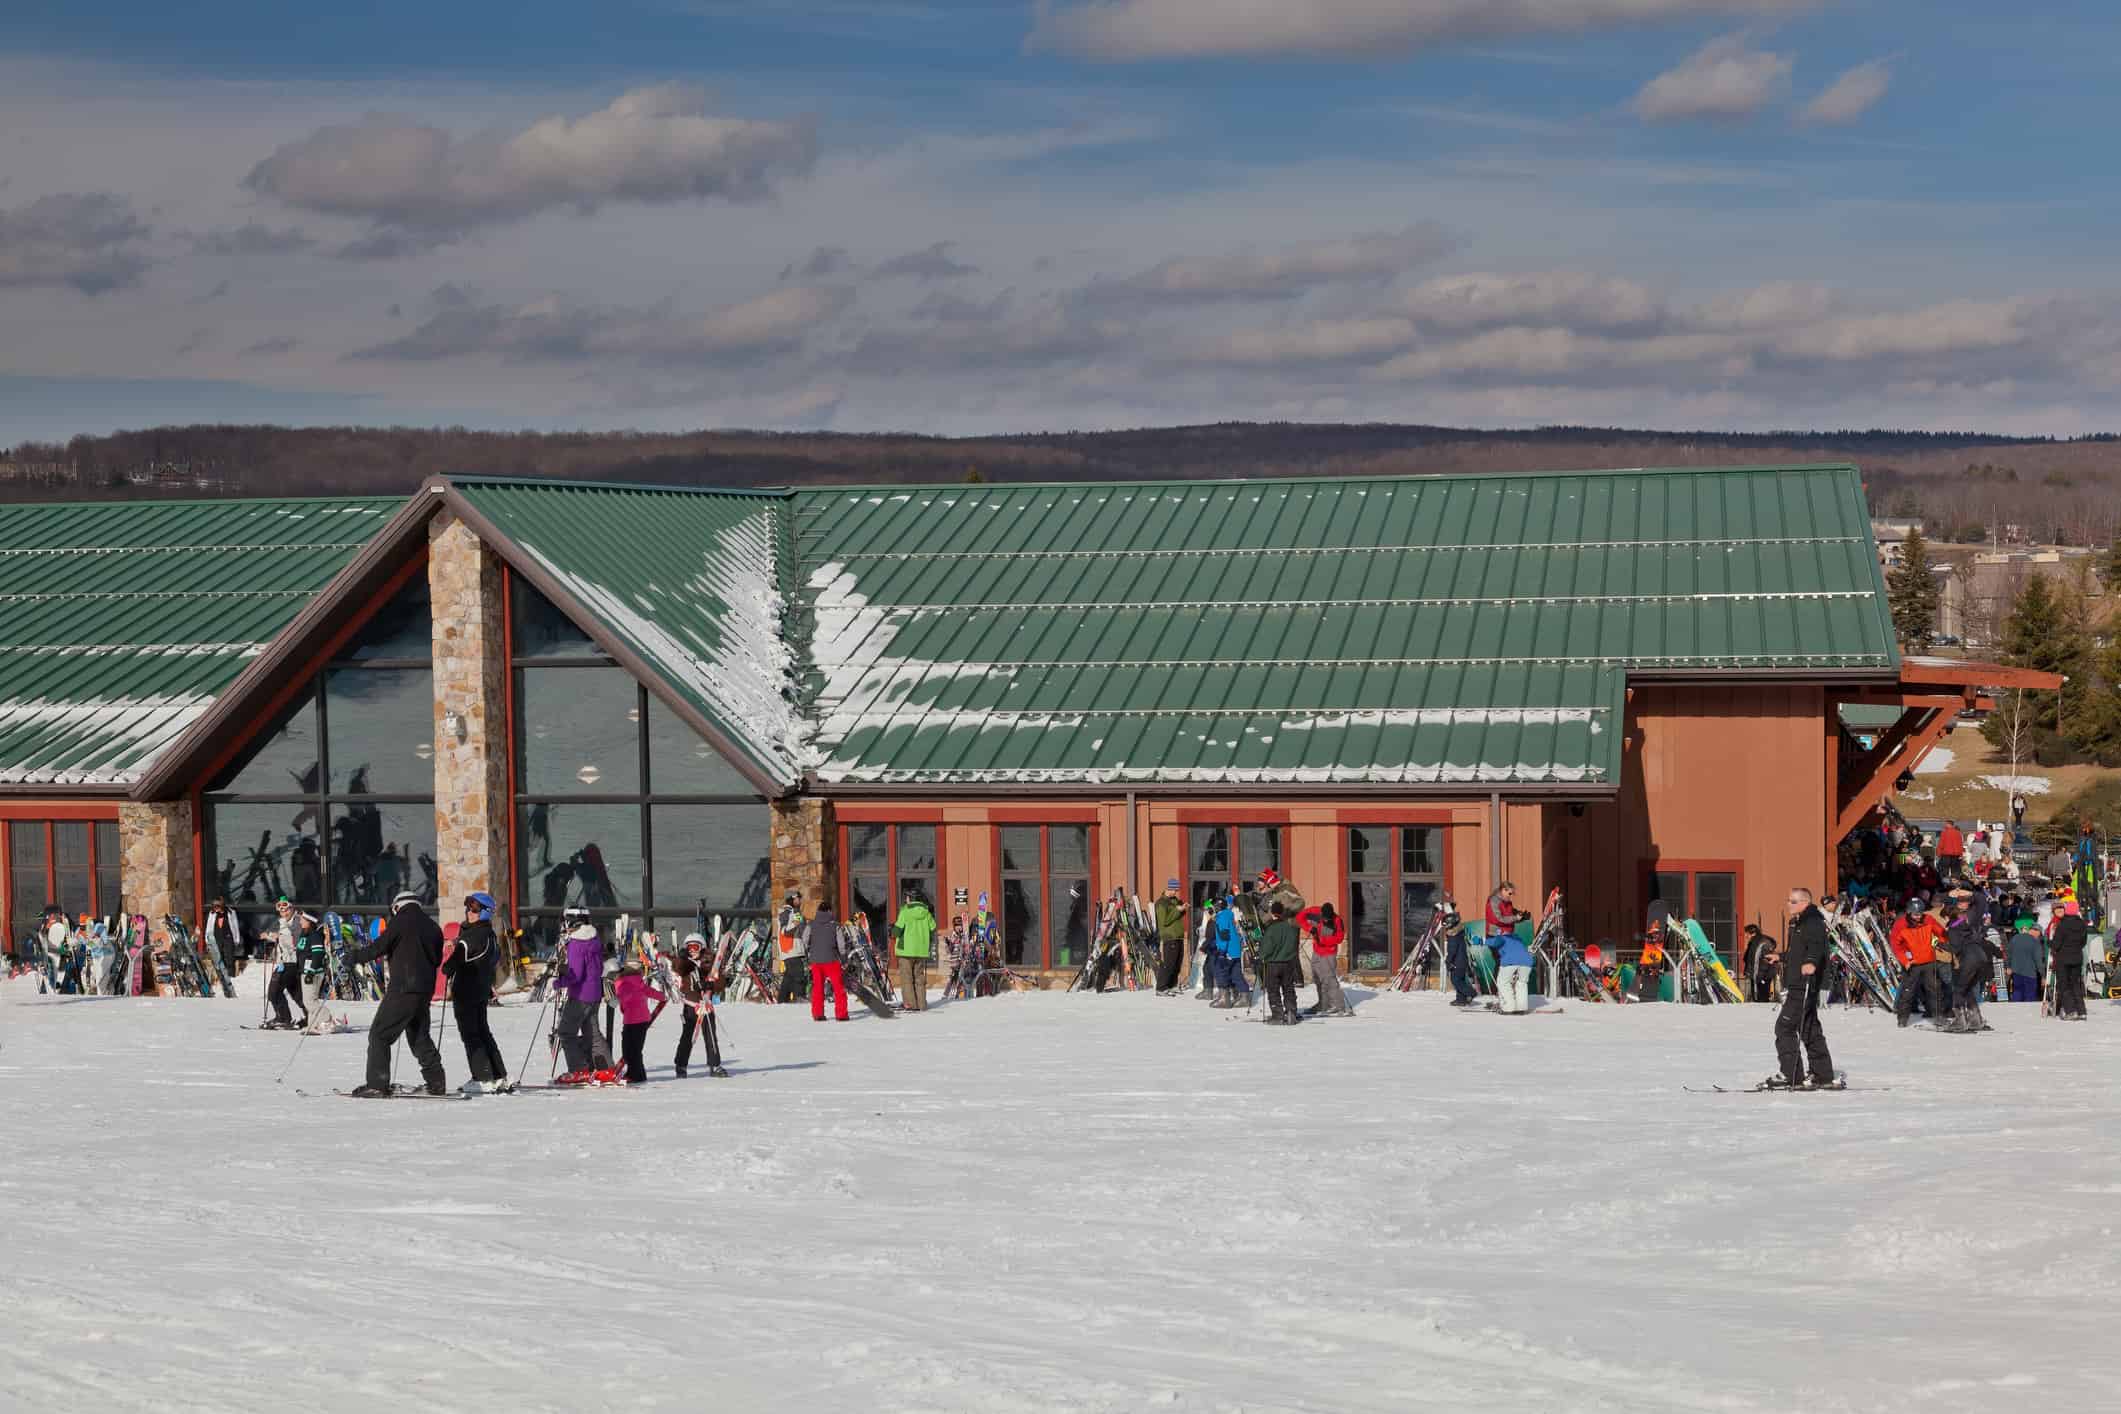 Wisp Ski Lodge a McHenry, MD